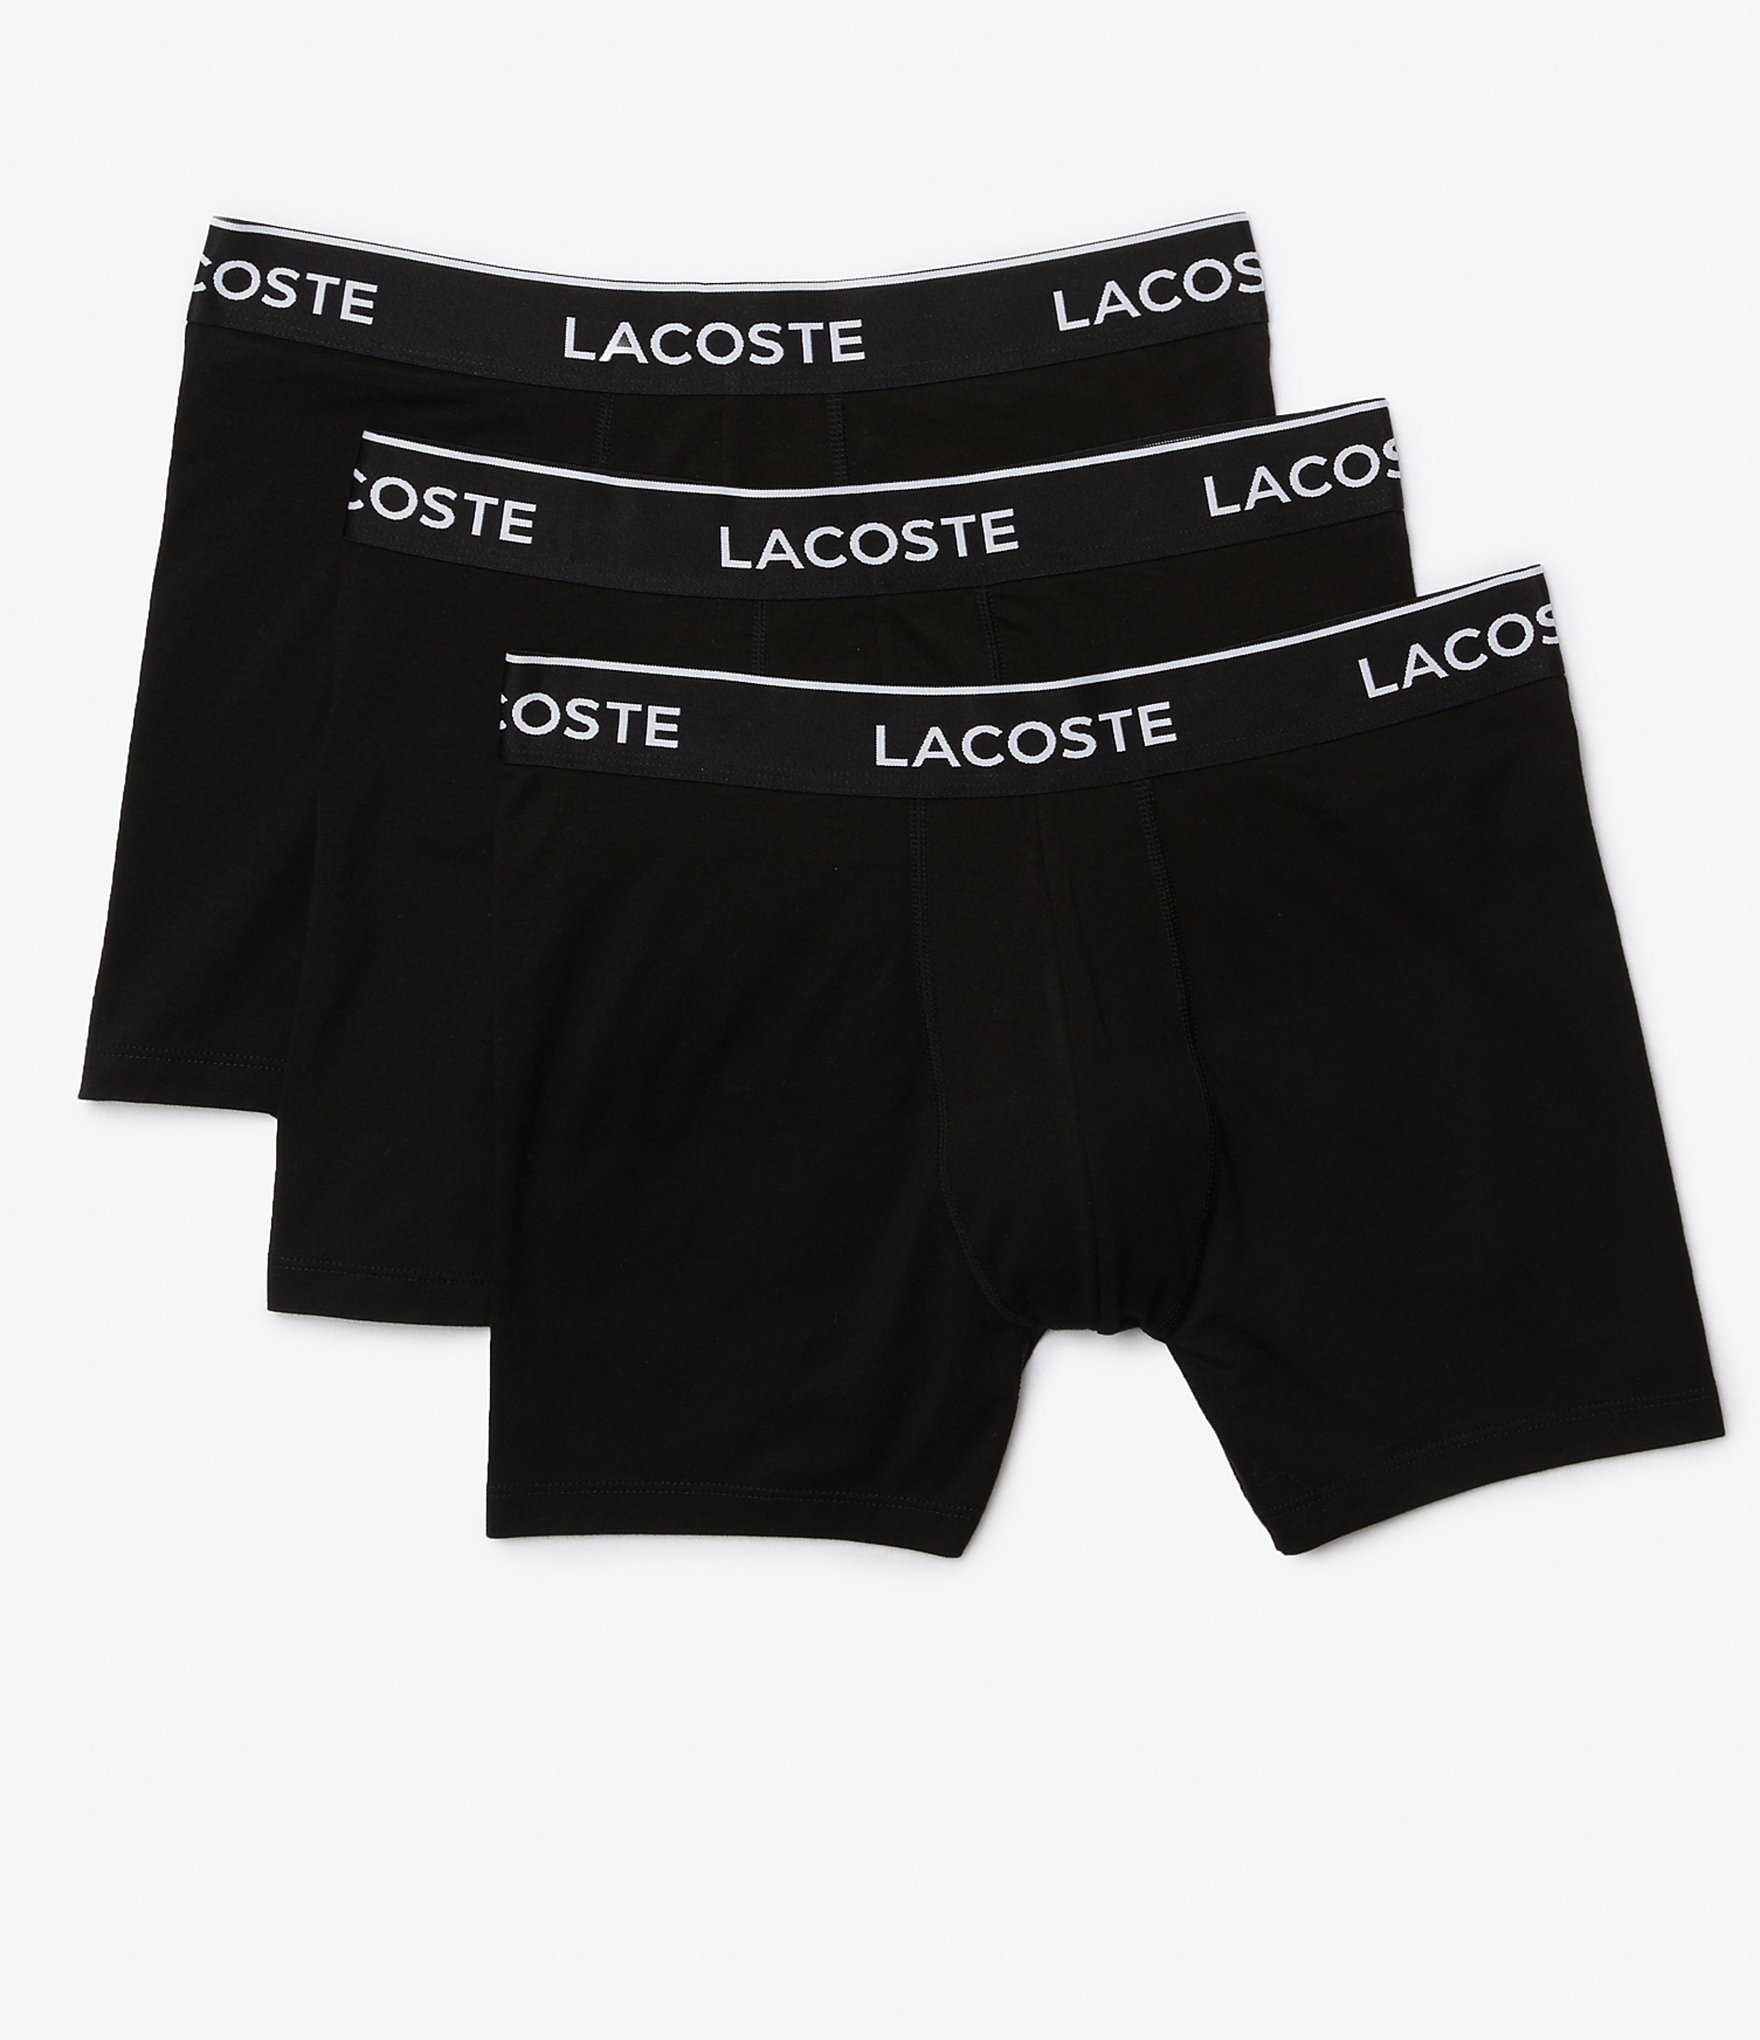 Lacoste Men's Underwear Socks & Undershirts